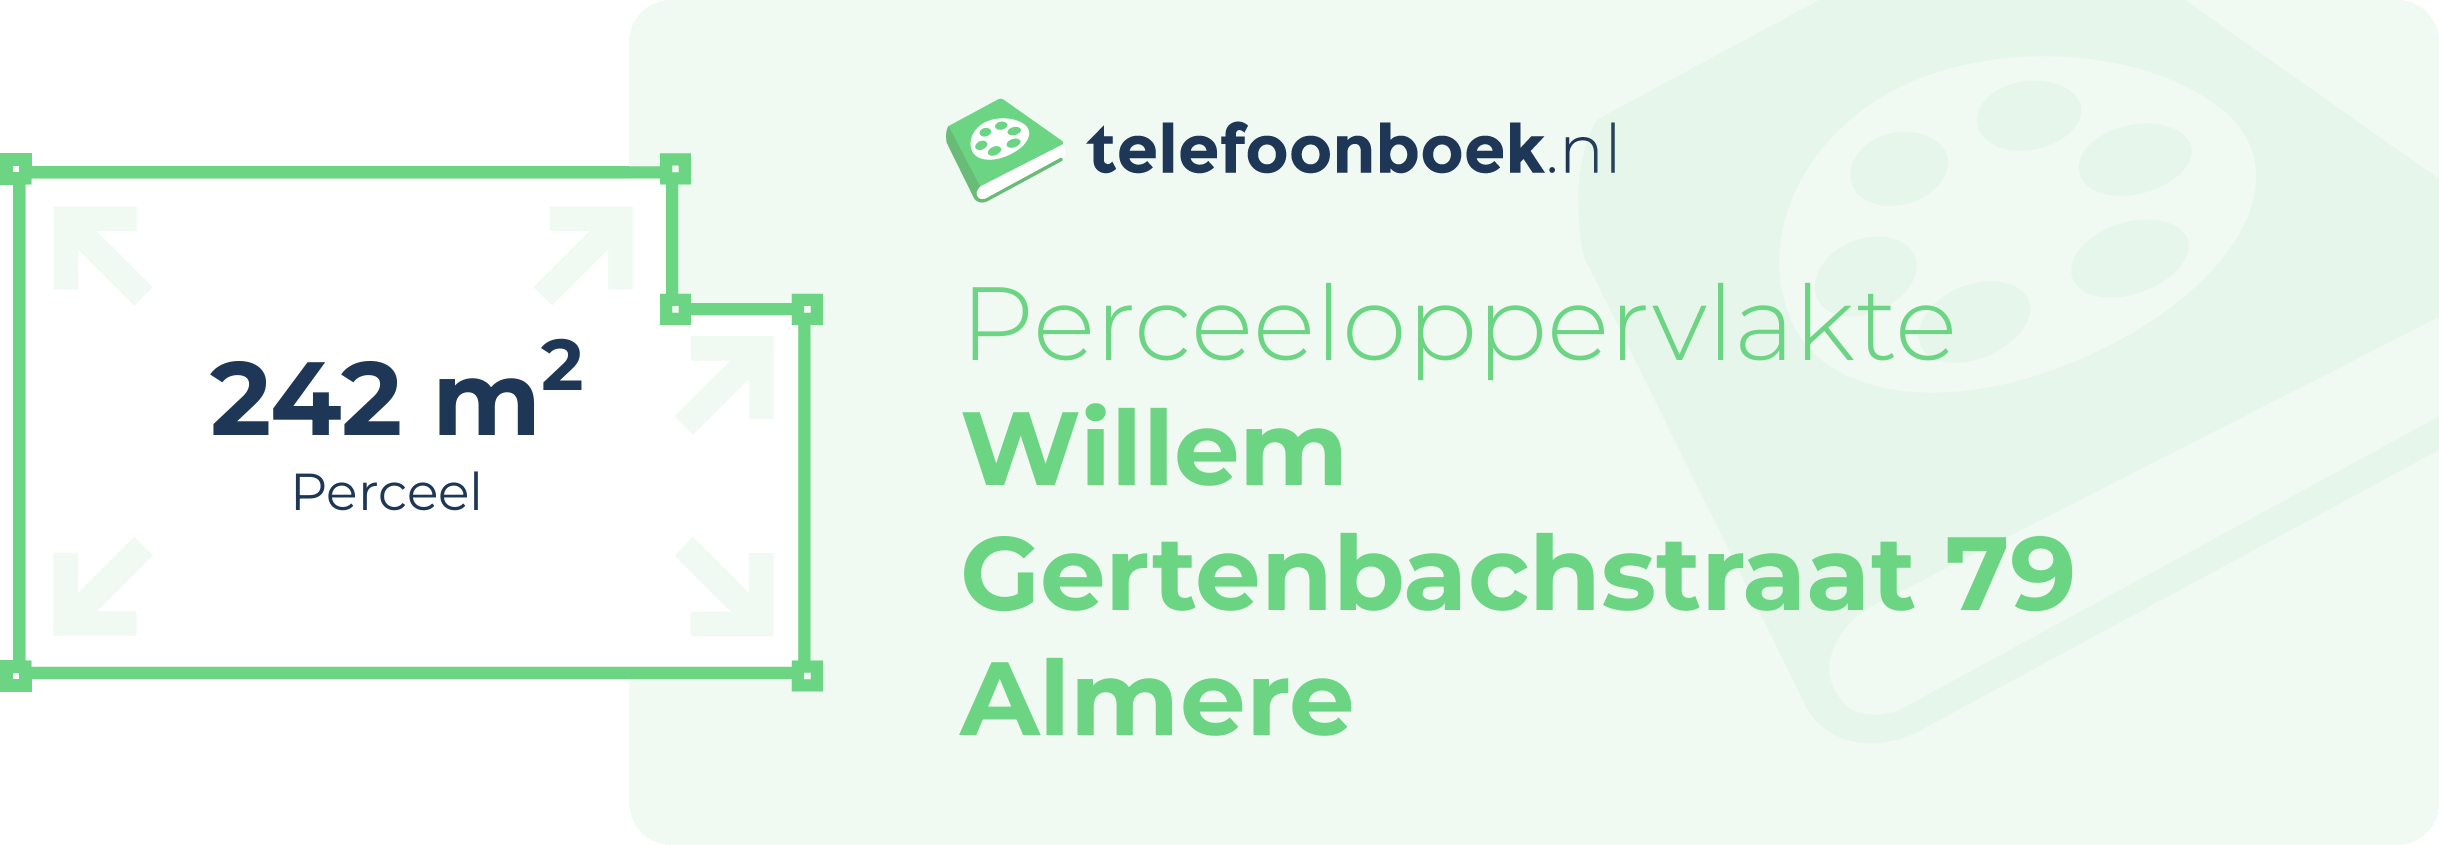 Perceeloppervlakte Willem Gertenbachstraat 79 Almere